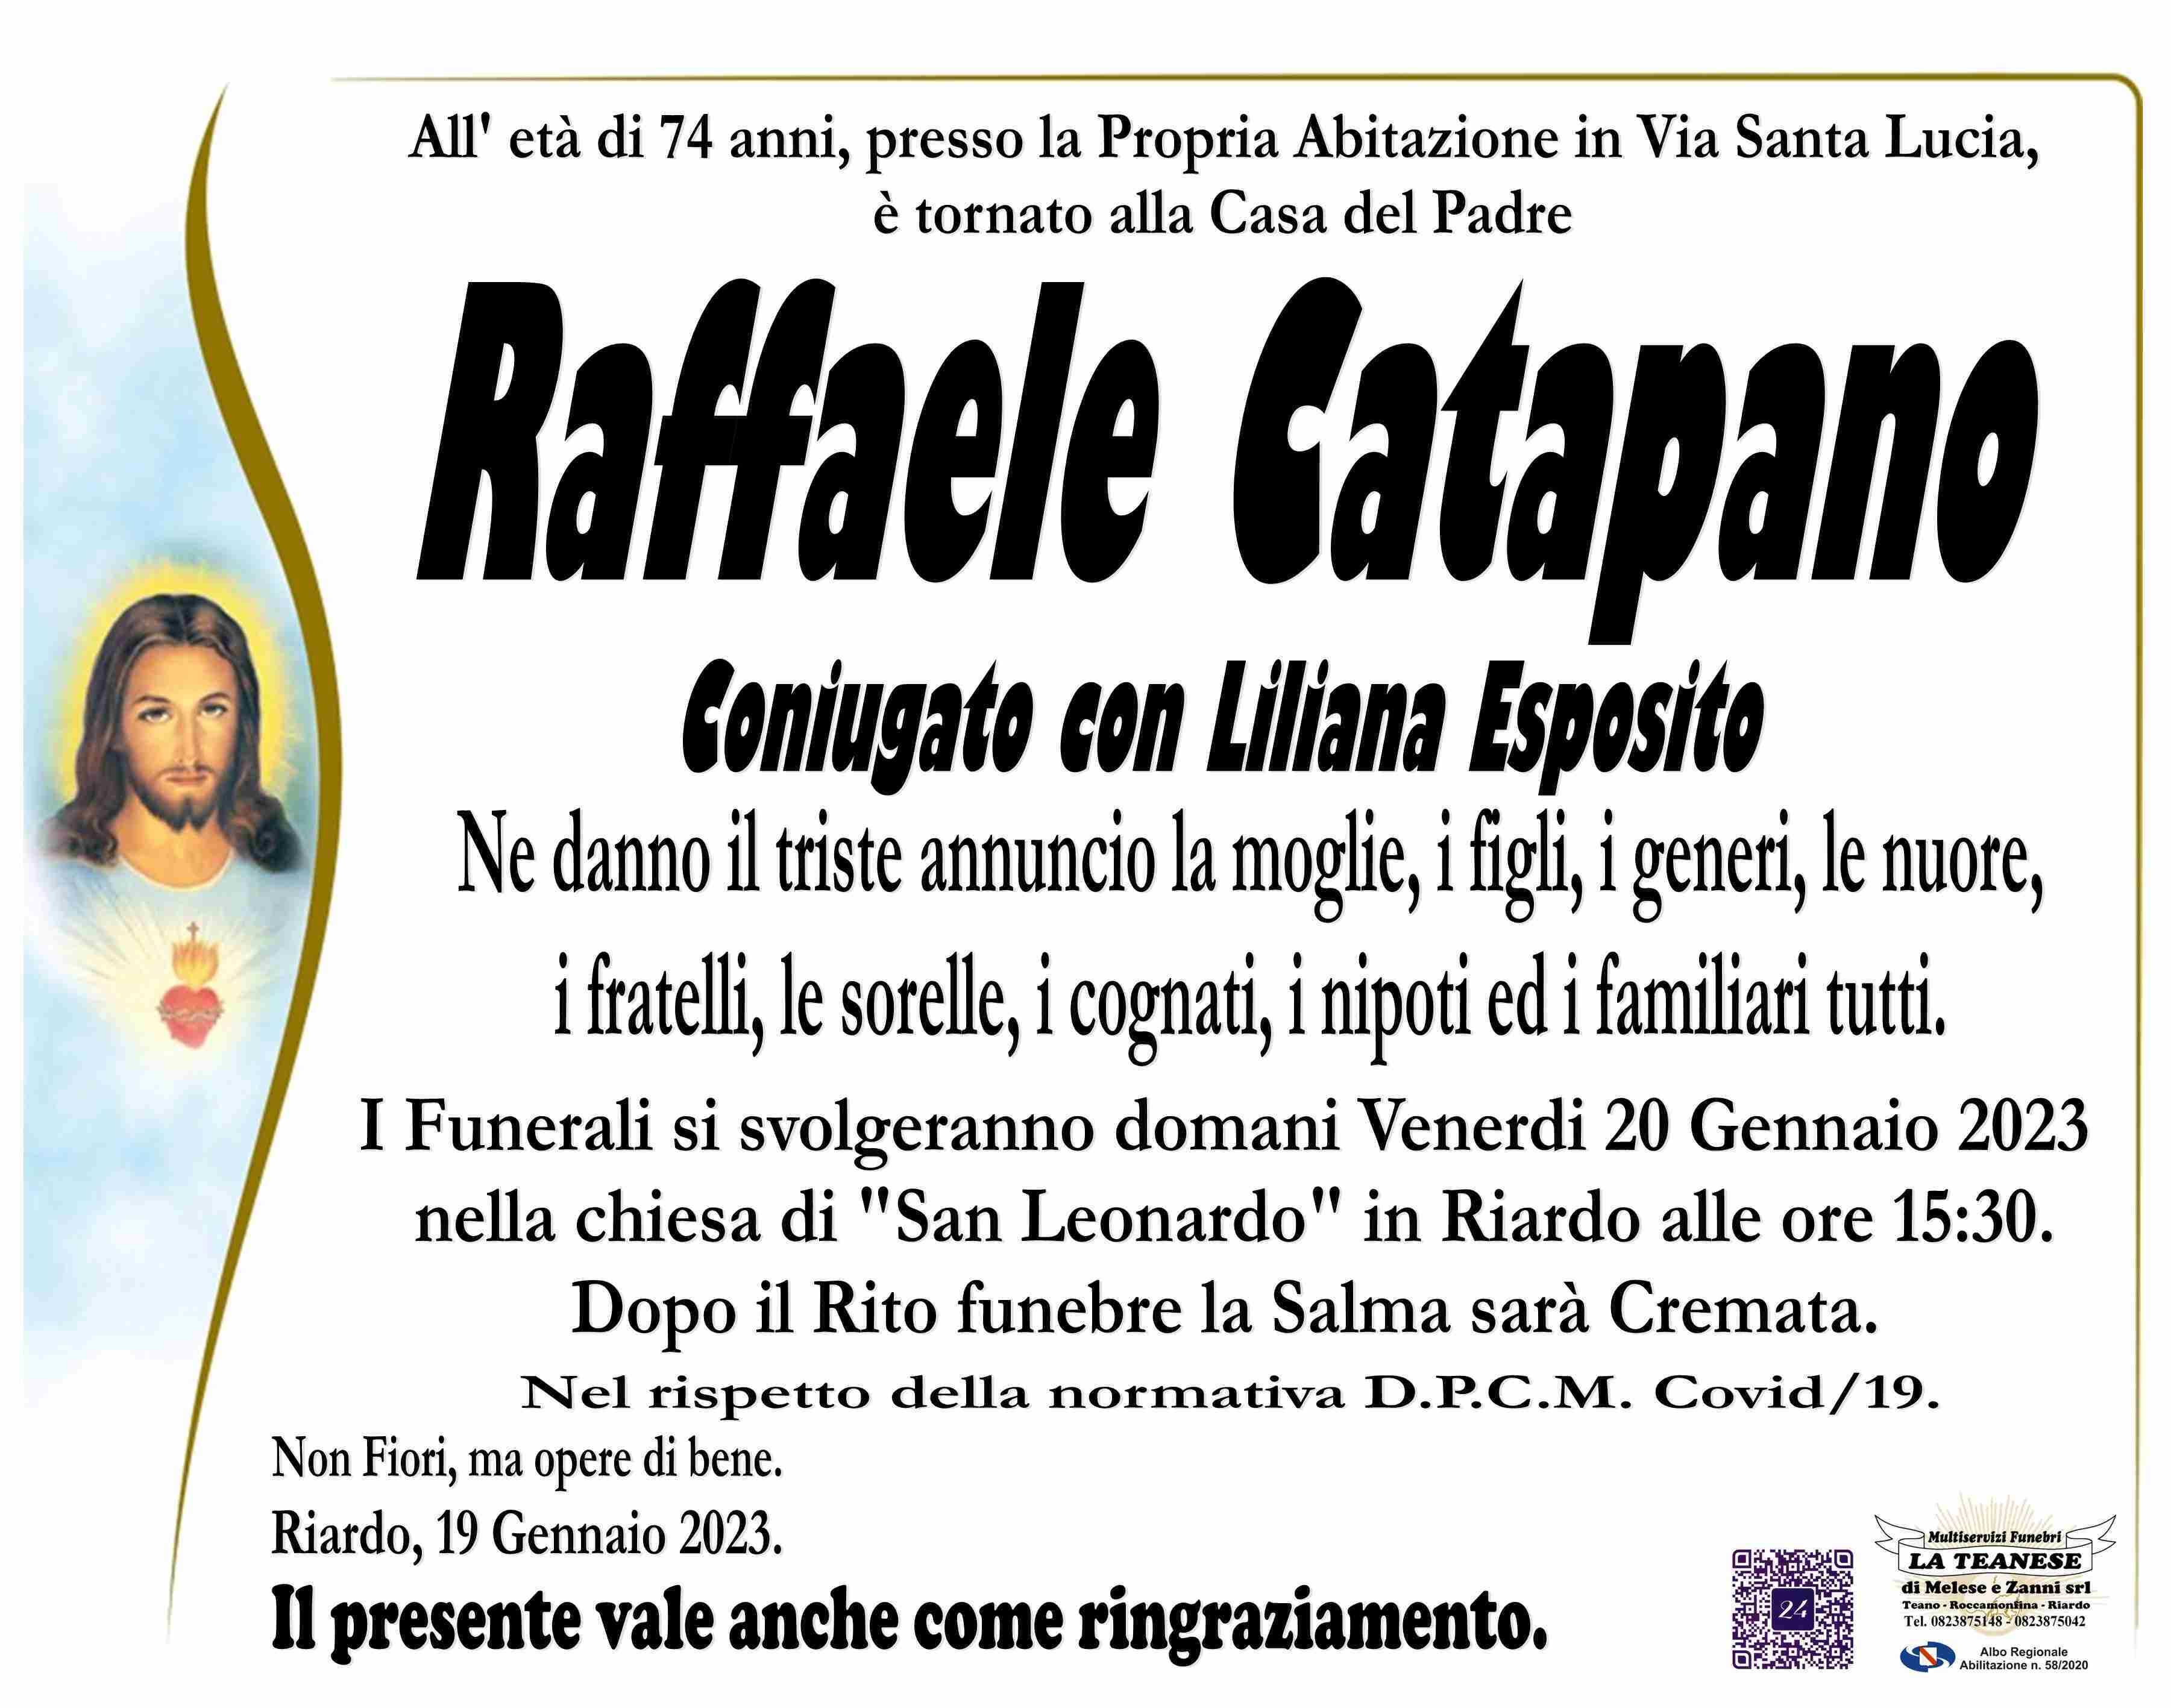 Raffaele Catapano